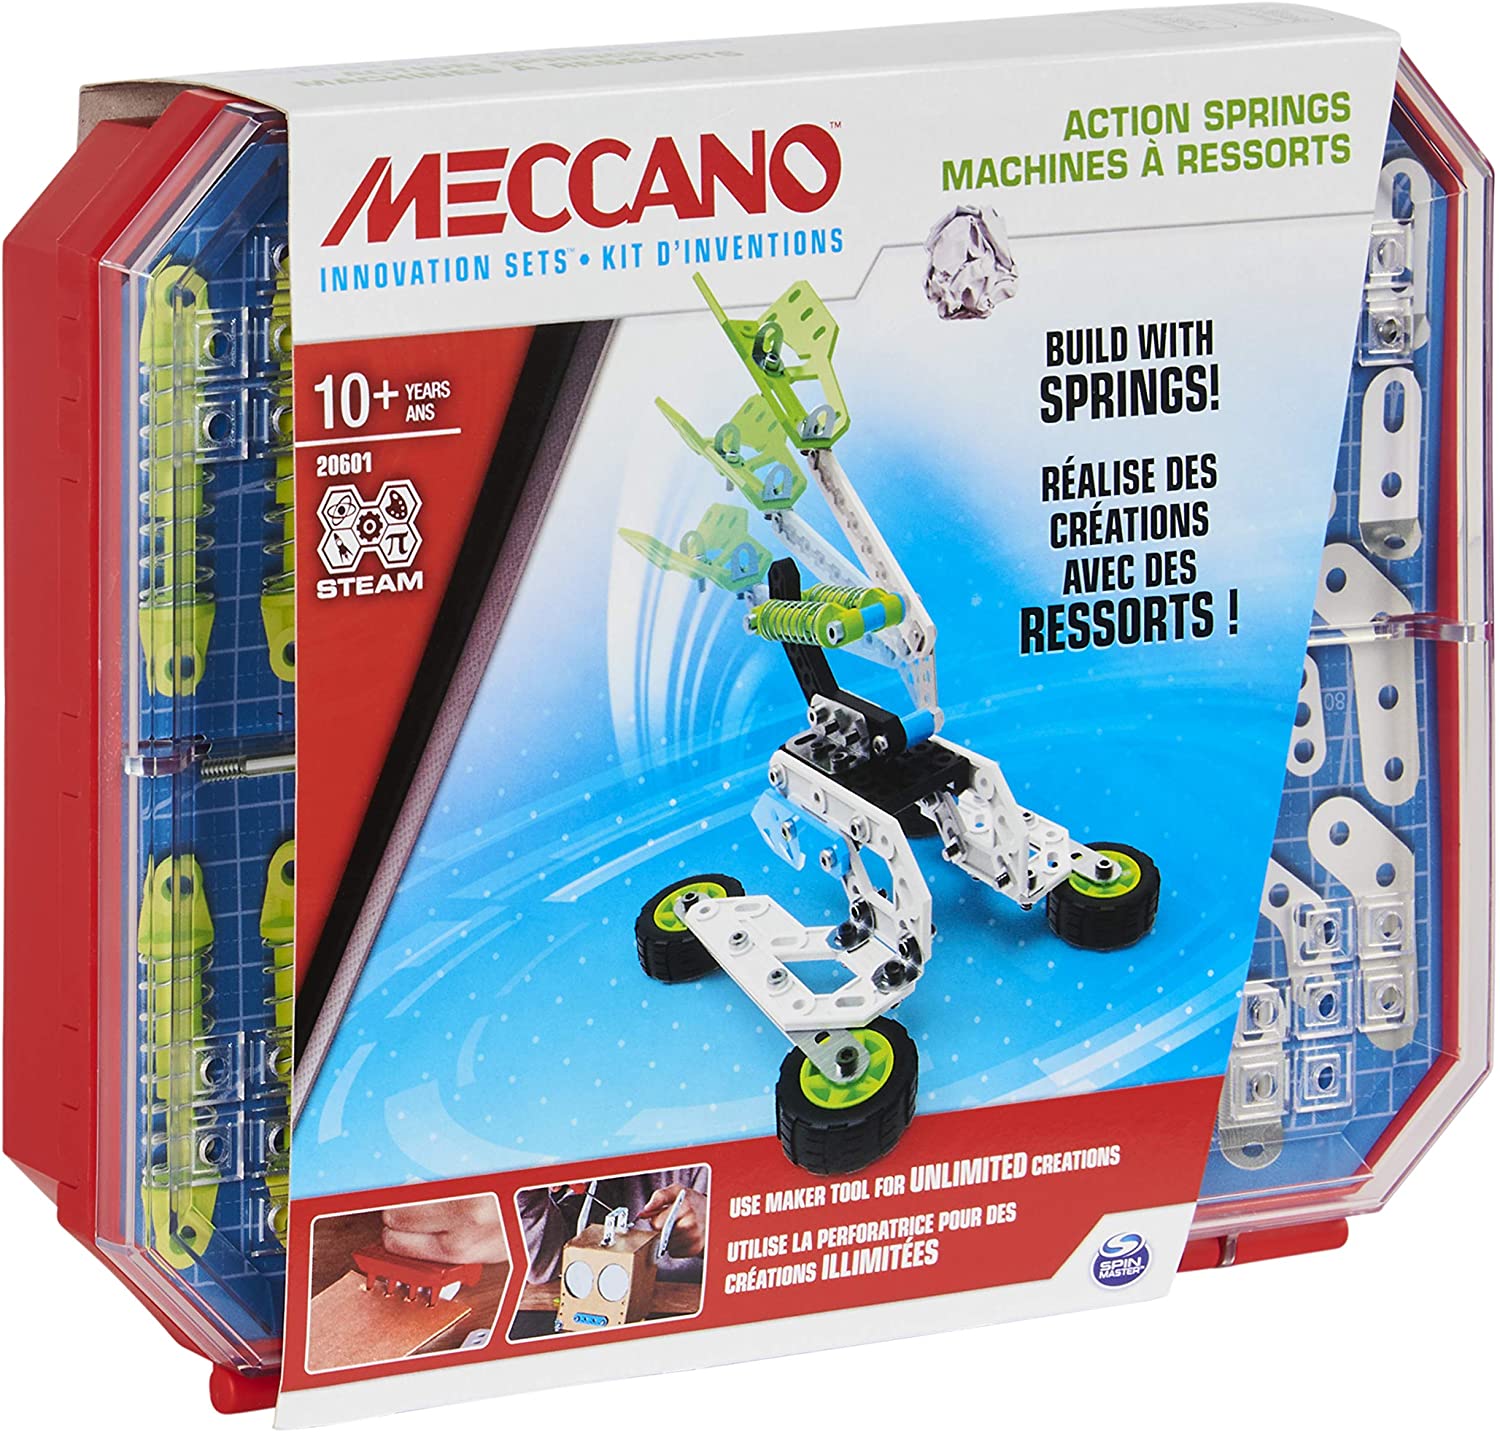 Meccano Kit d'inventions ressorts set 4 6053909